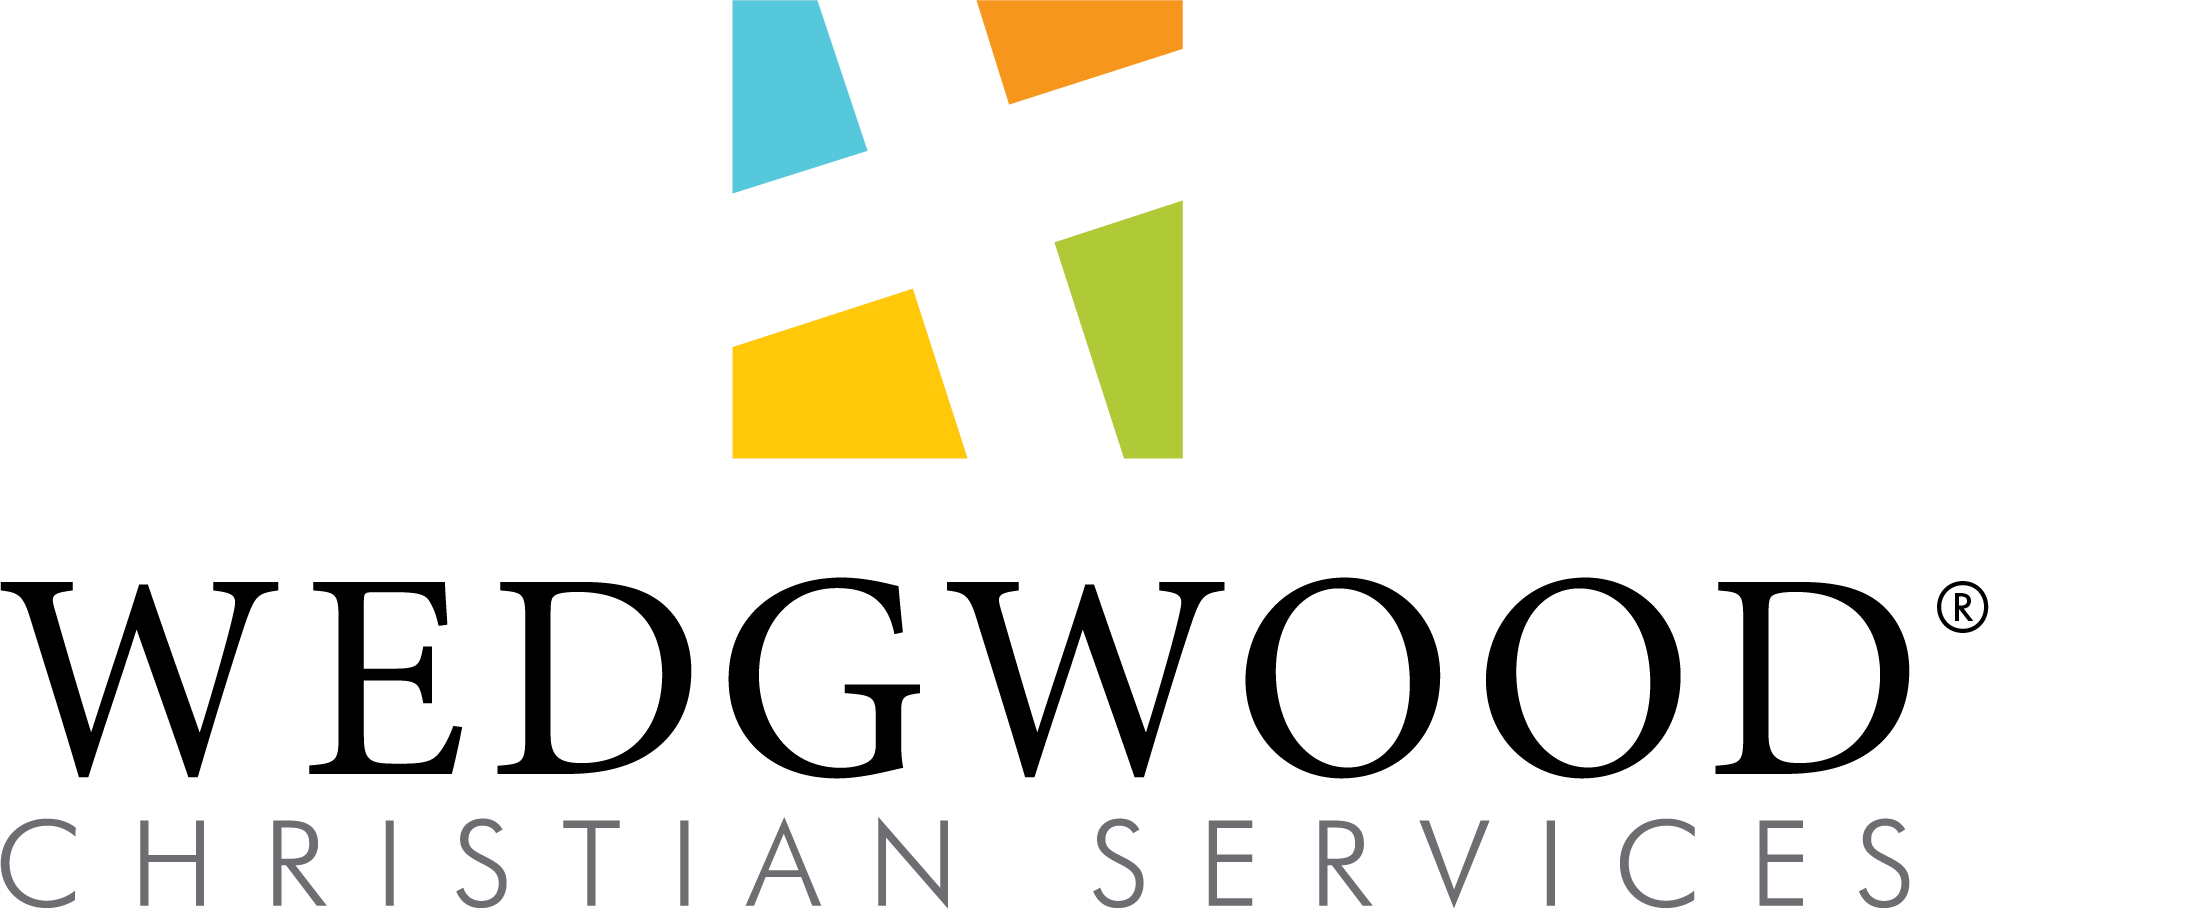 Wedgwood Christian Services logo 